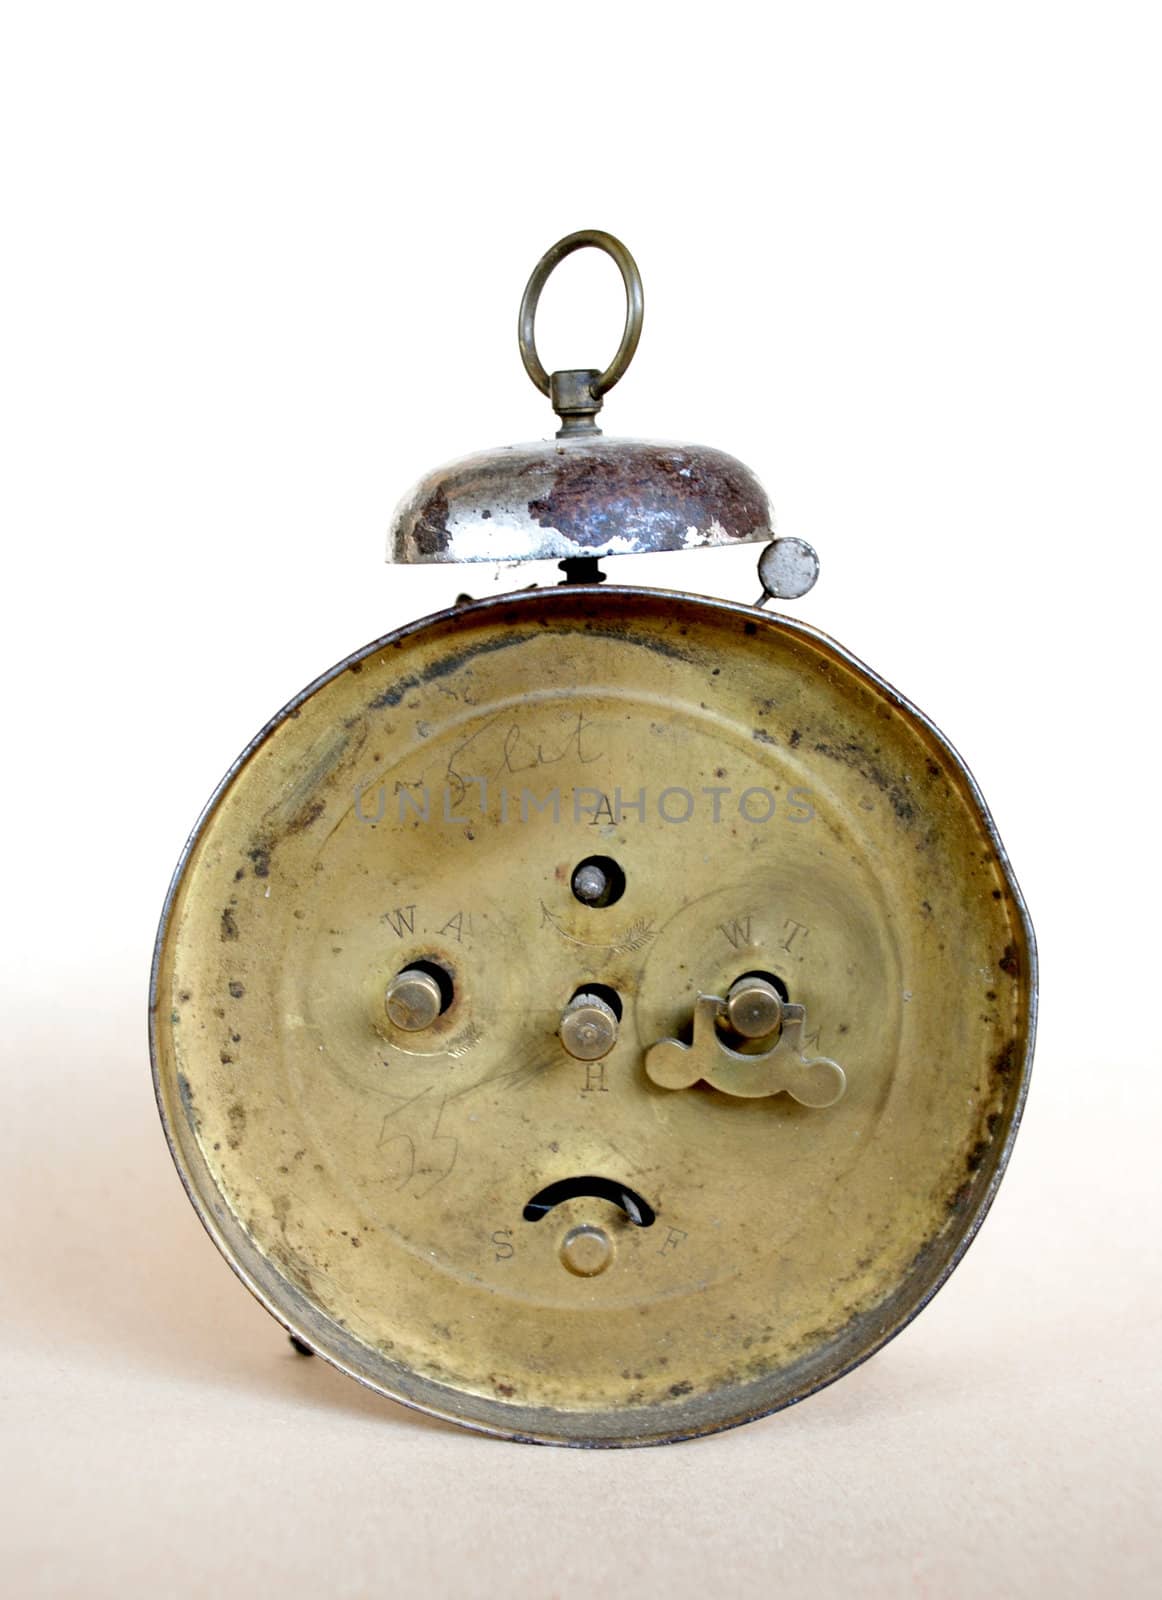 Brass widgets on old yellow alarm clock.